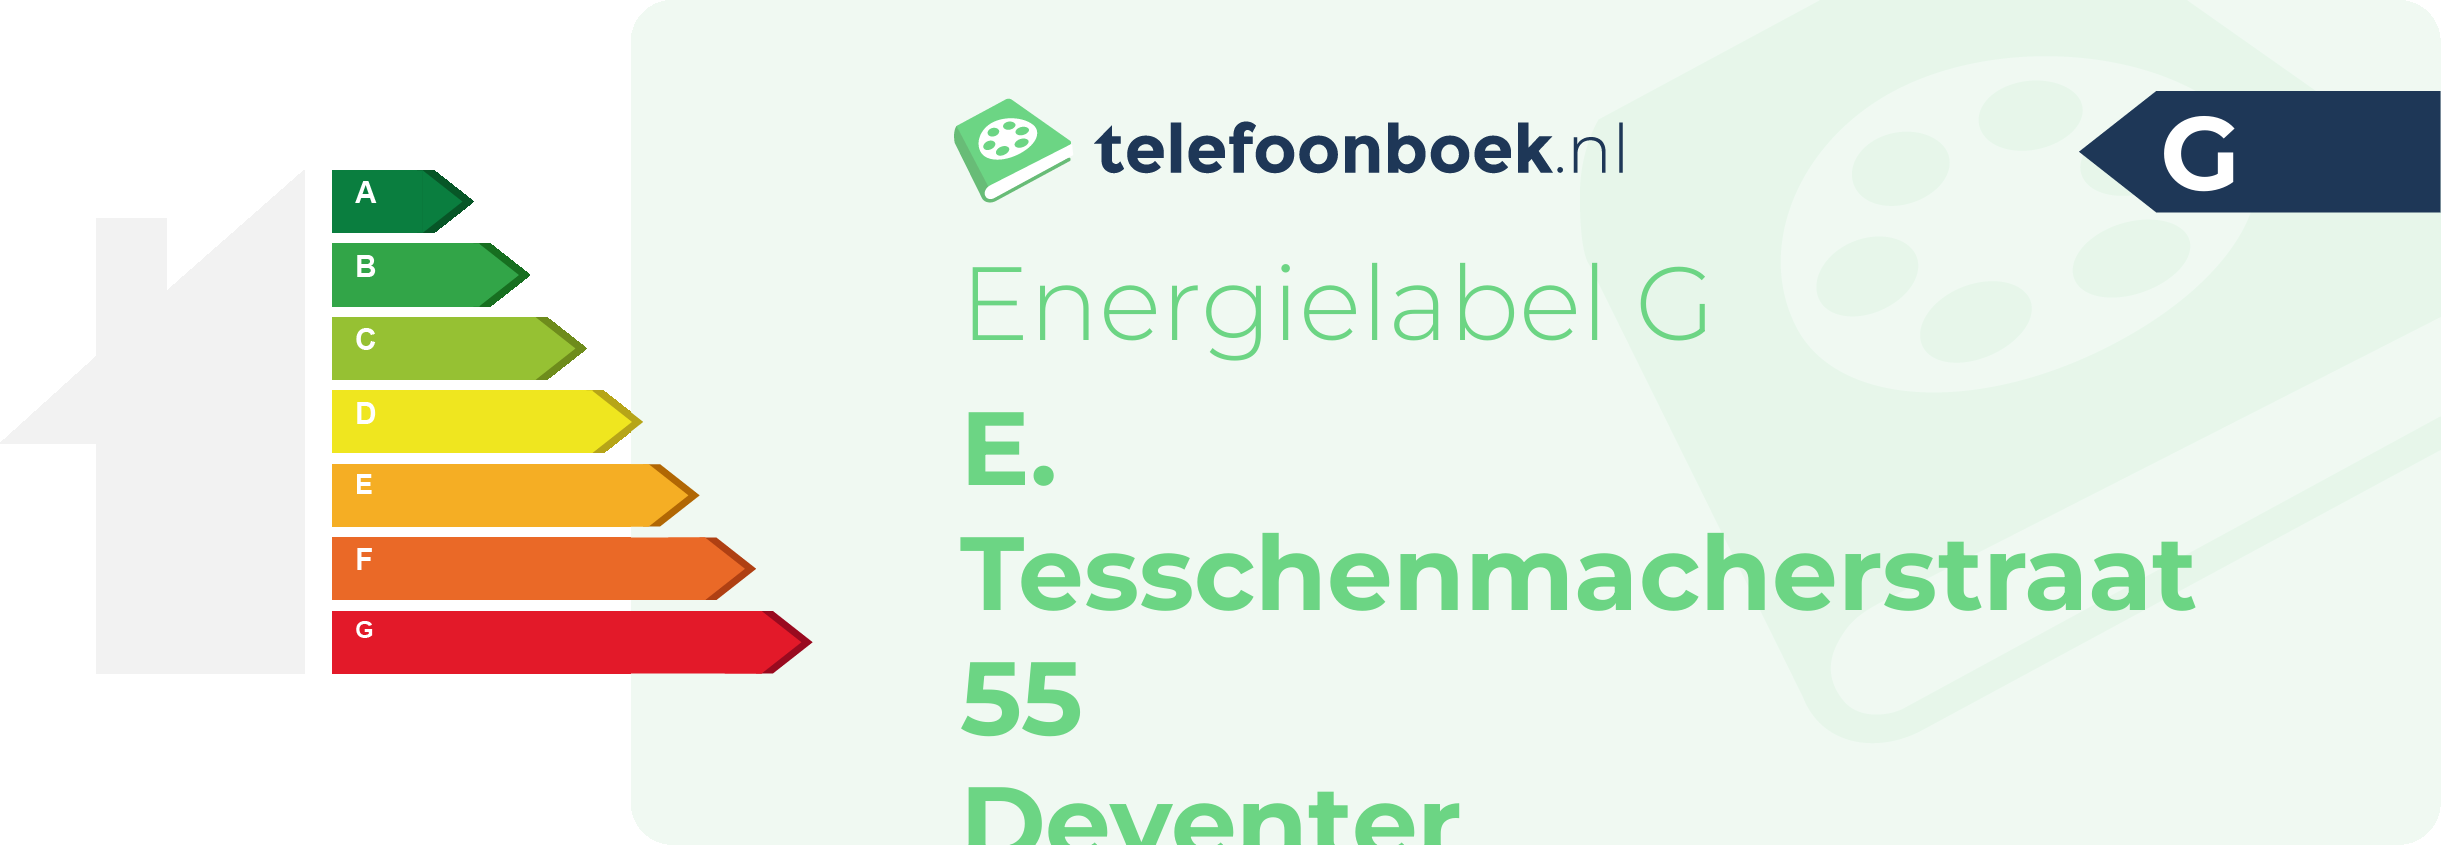 Energielabel E. Tesschenmacherstraat 55 Deventer